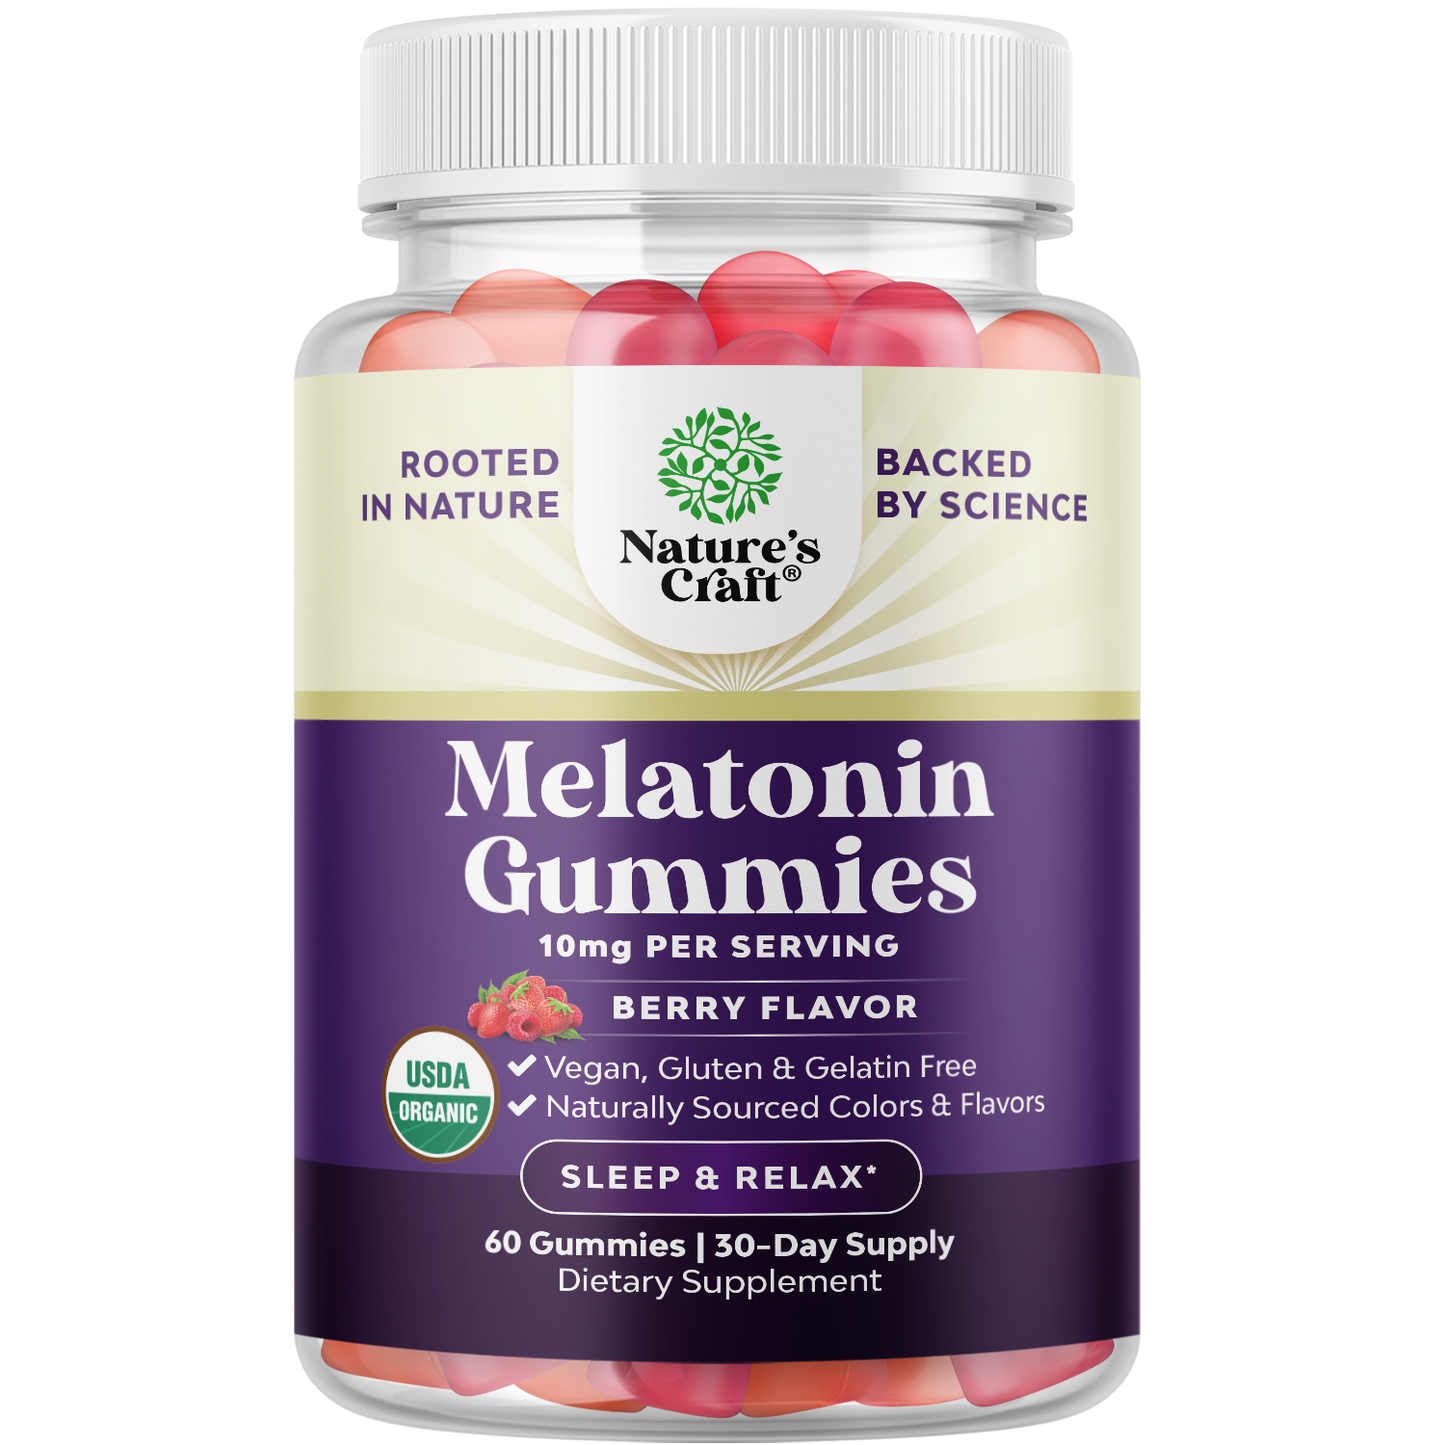 Melatonin Gummies 10mg per serving - Berry flavor